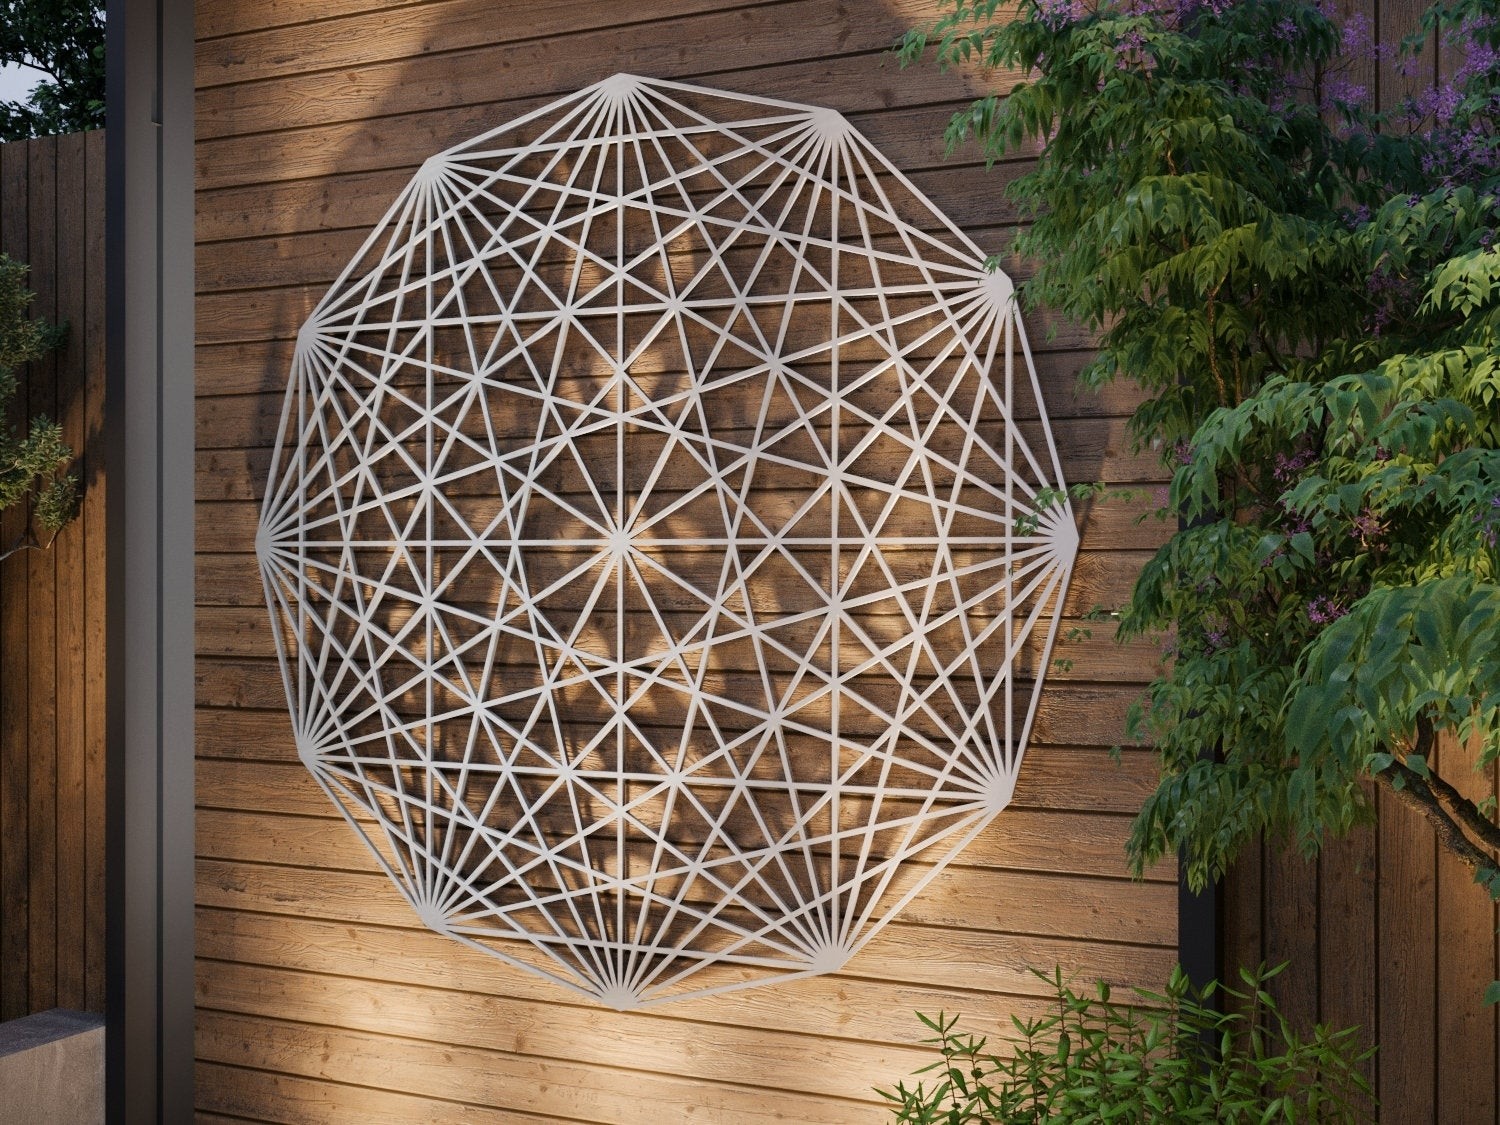 Tesseract sacred geometry outdoor metal wall art sculpture 2